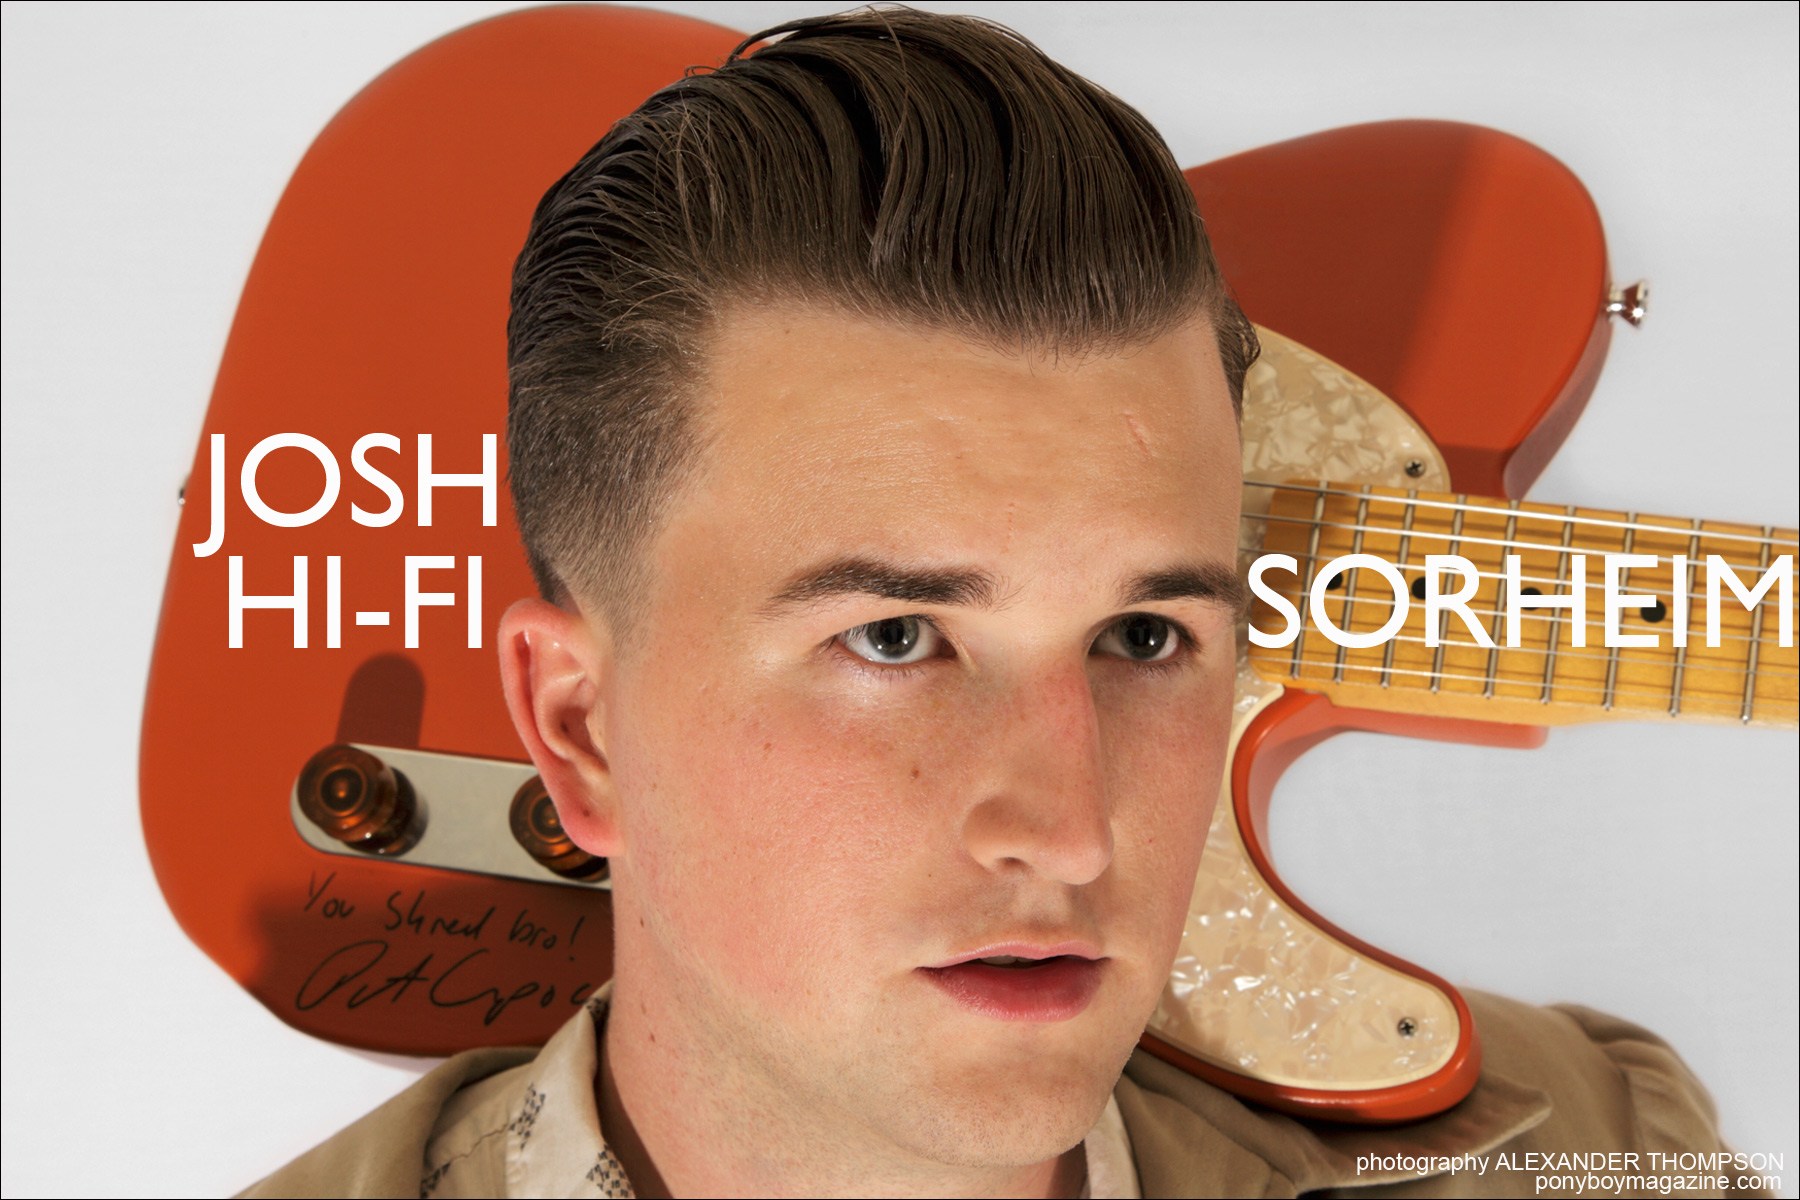 Josh Hi-Fi Sorheim, rockabilly musician with the Wild Records Label in Hollywood, California. Portrait by Alexander Thompson for Ponyboy Magazine.